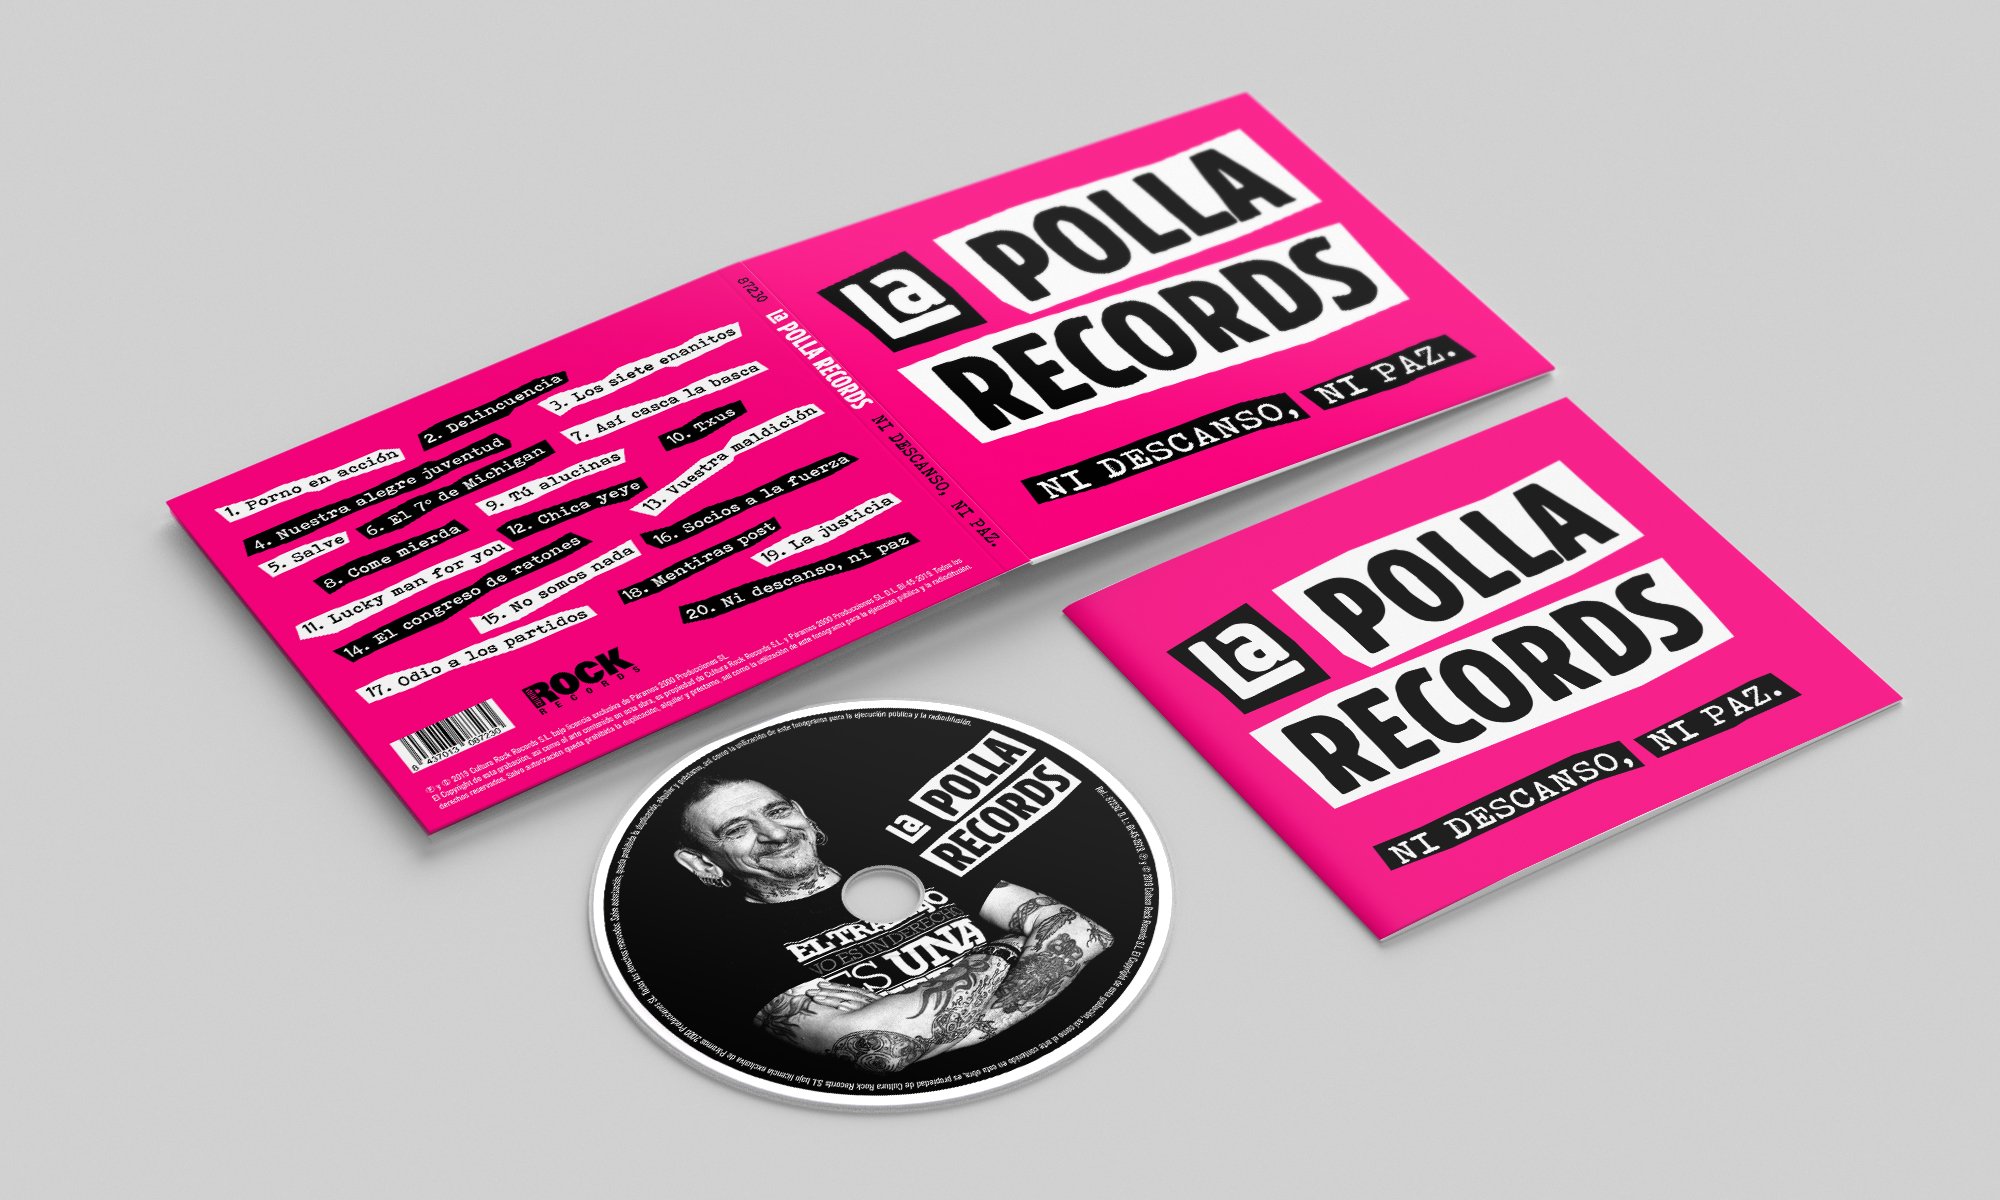 La Polla Records Oficial on Twitter: 